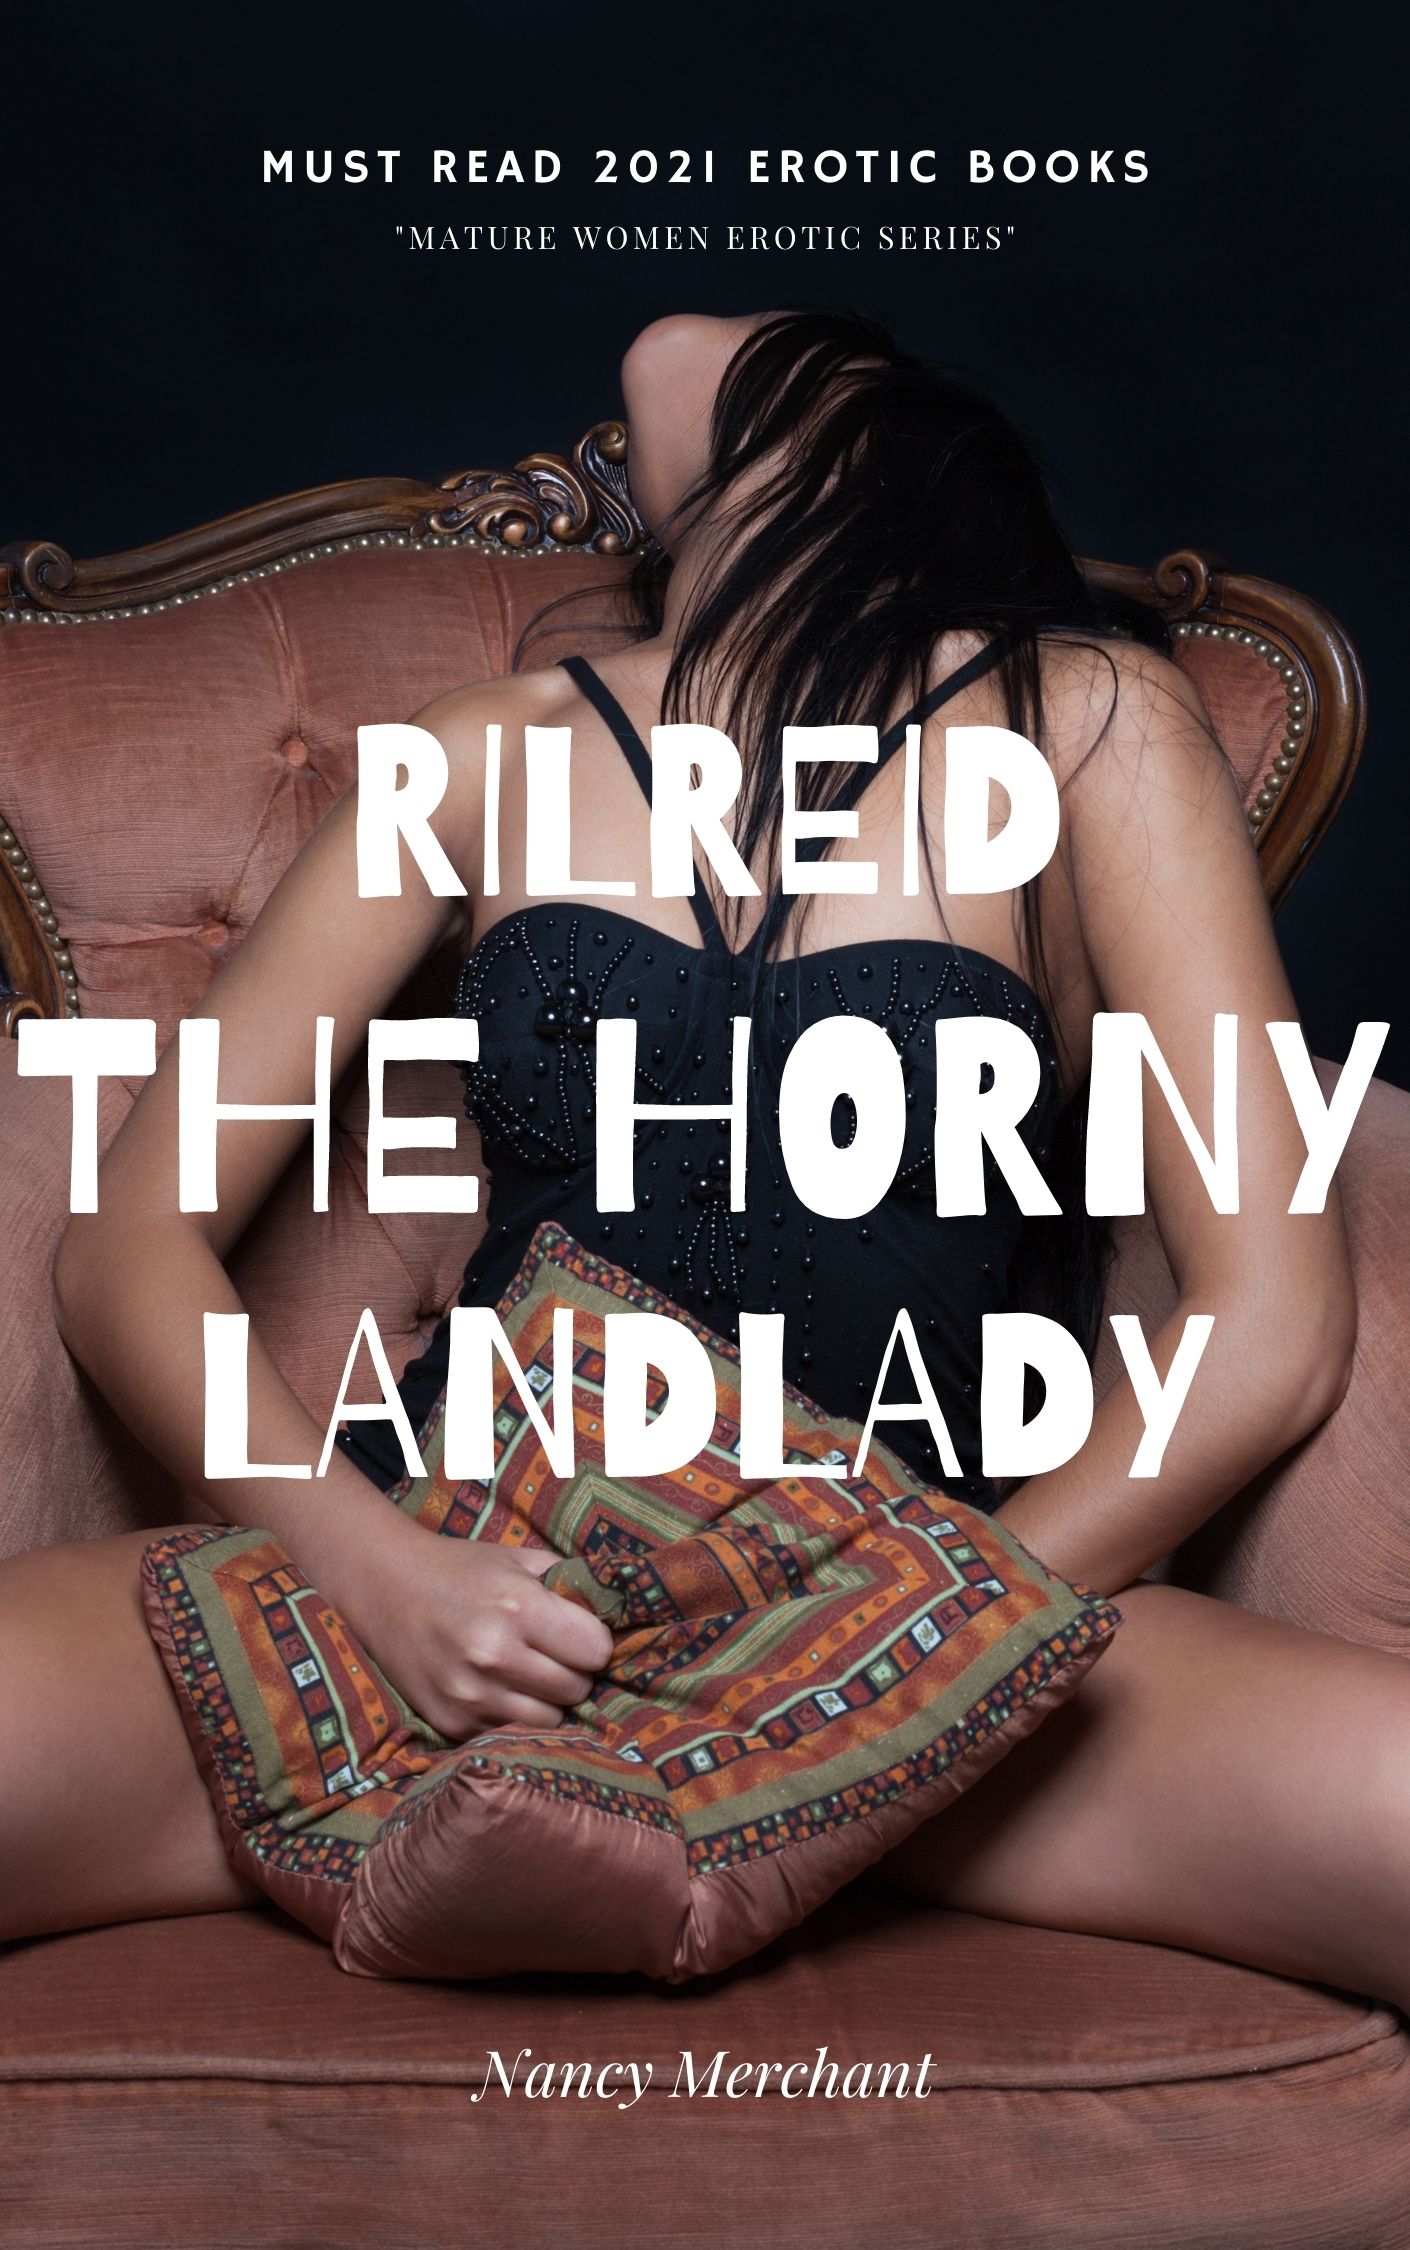 FREE: RILREID THE HORNY LANDLADY: by Nancy Merchant